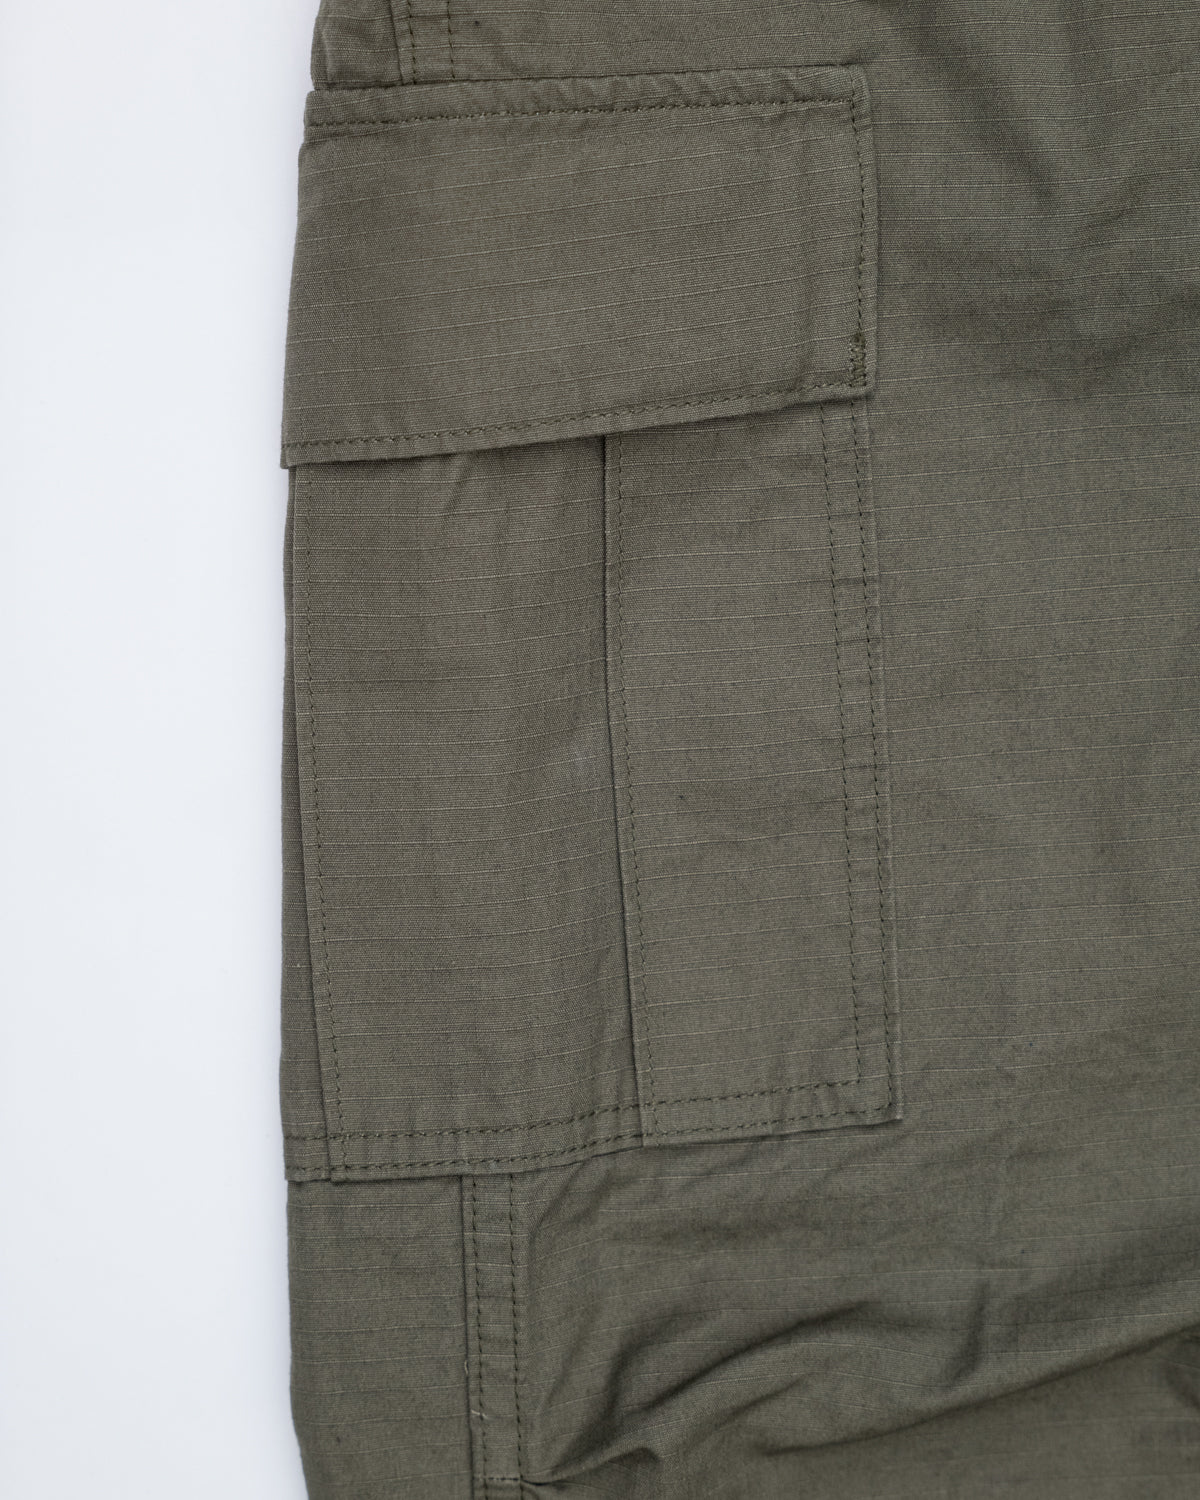 Buy Devil Men's Open Cotton Slim fit Cargo Trouser Pant 6 Pocket (Black,  32) at Amazon.in